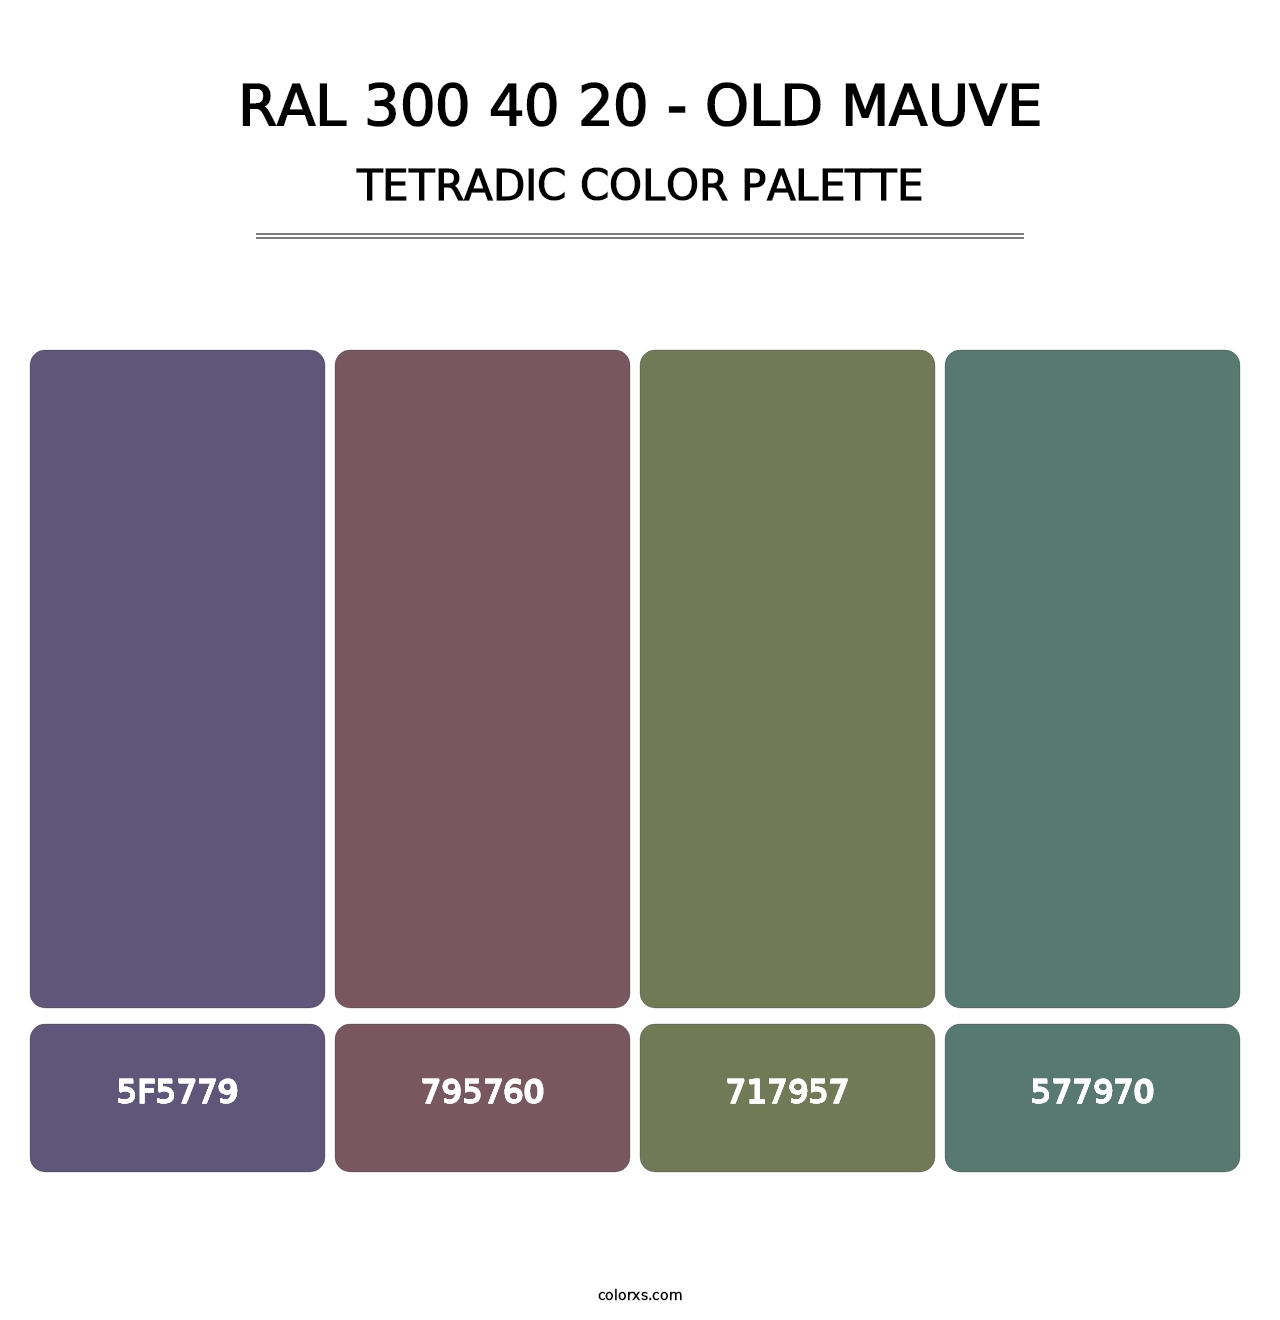 RAL 300 40 20 - Old Mauve - Tetradic Color Palette